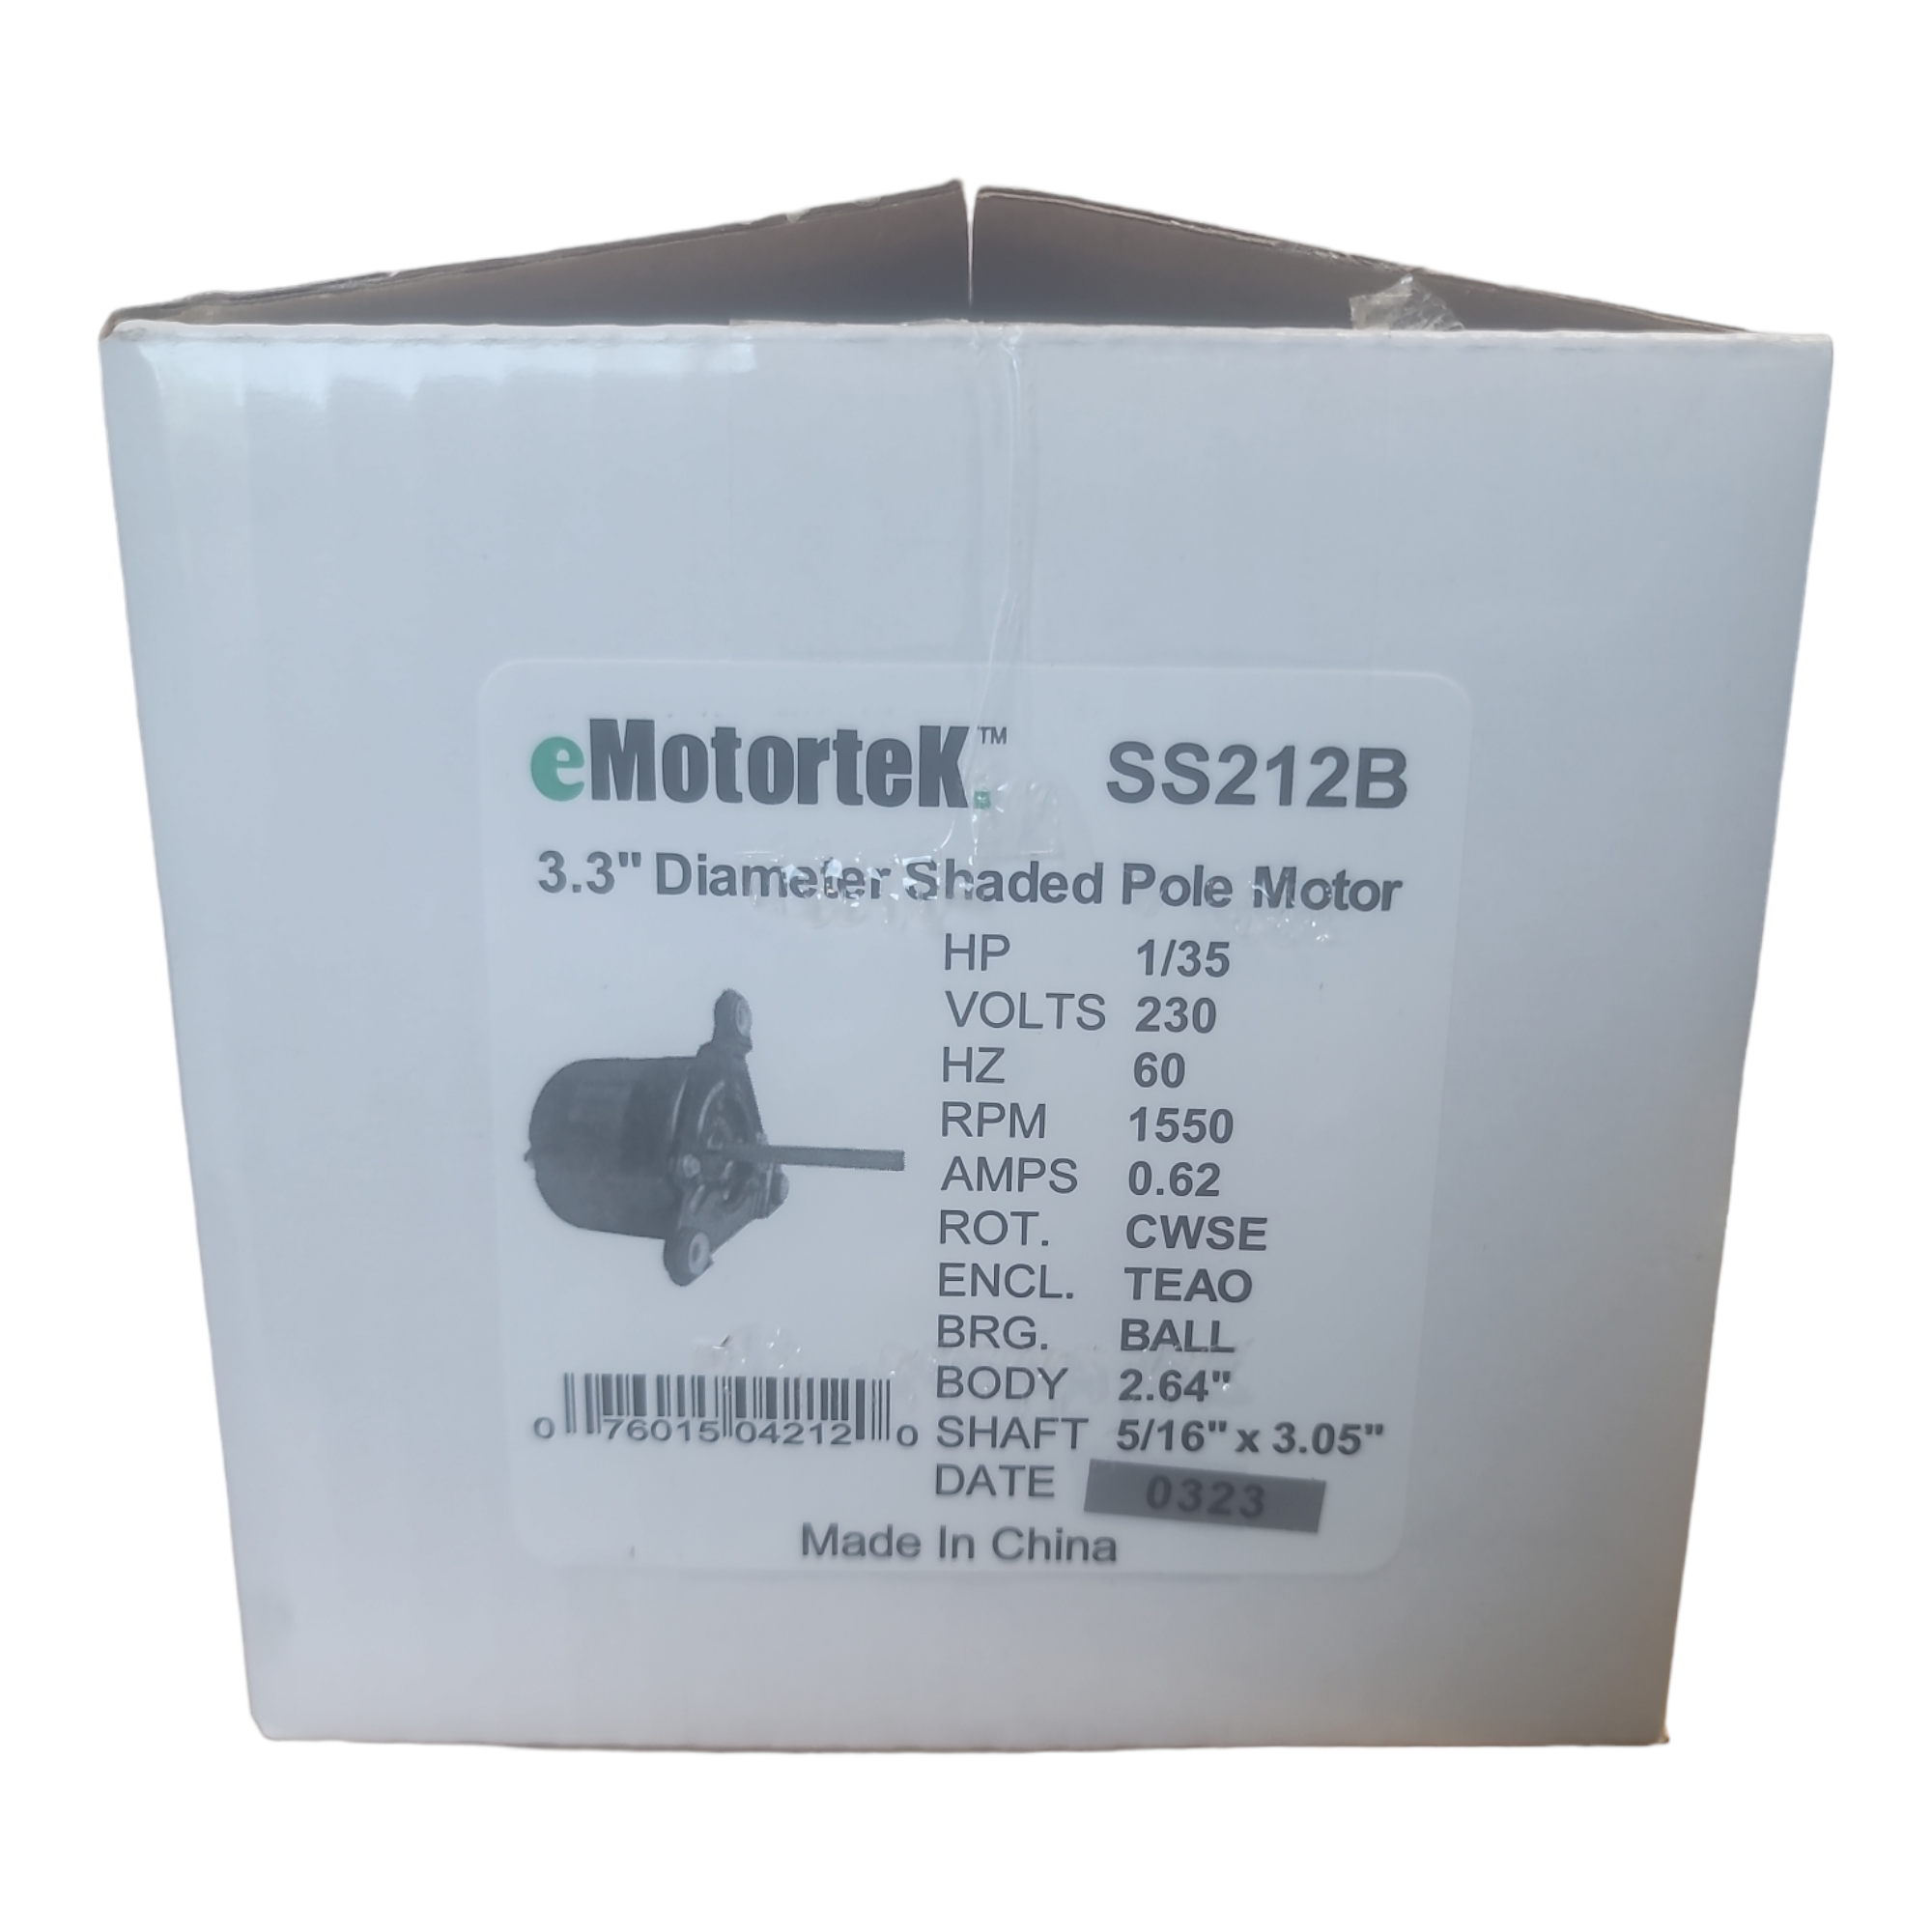 SS212B eMotorteK Replacement Motor for Rotom R212, Fasco D1118, OmniDrive SS212B